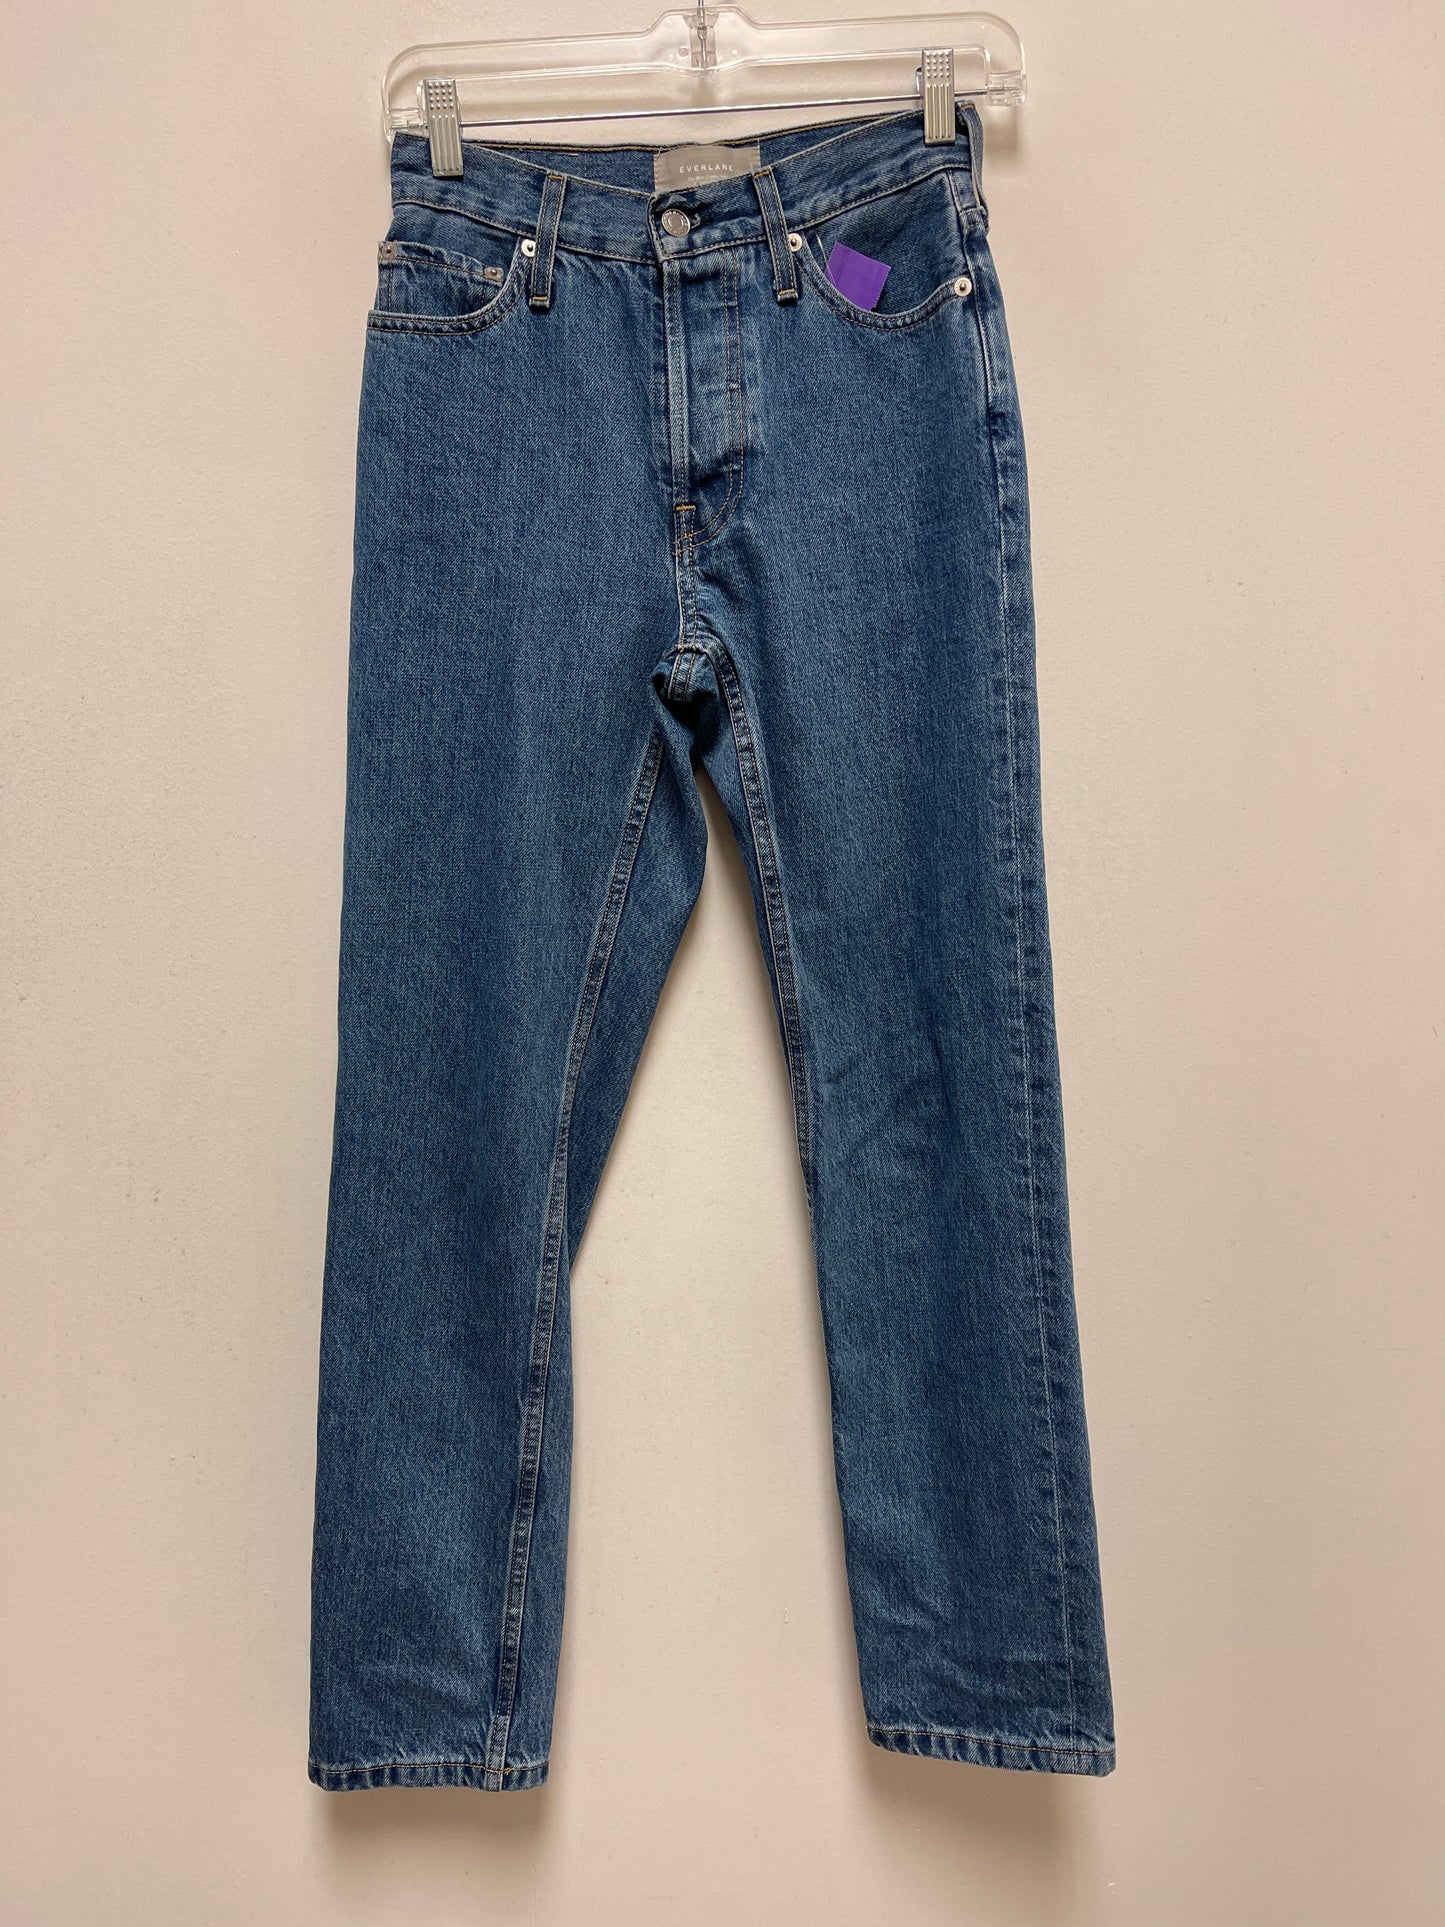 Blue Denim Jeans Skinny Everlane, Size 0